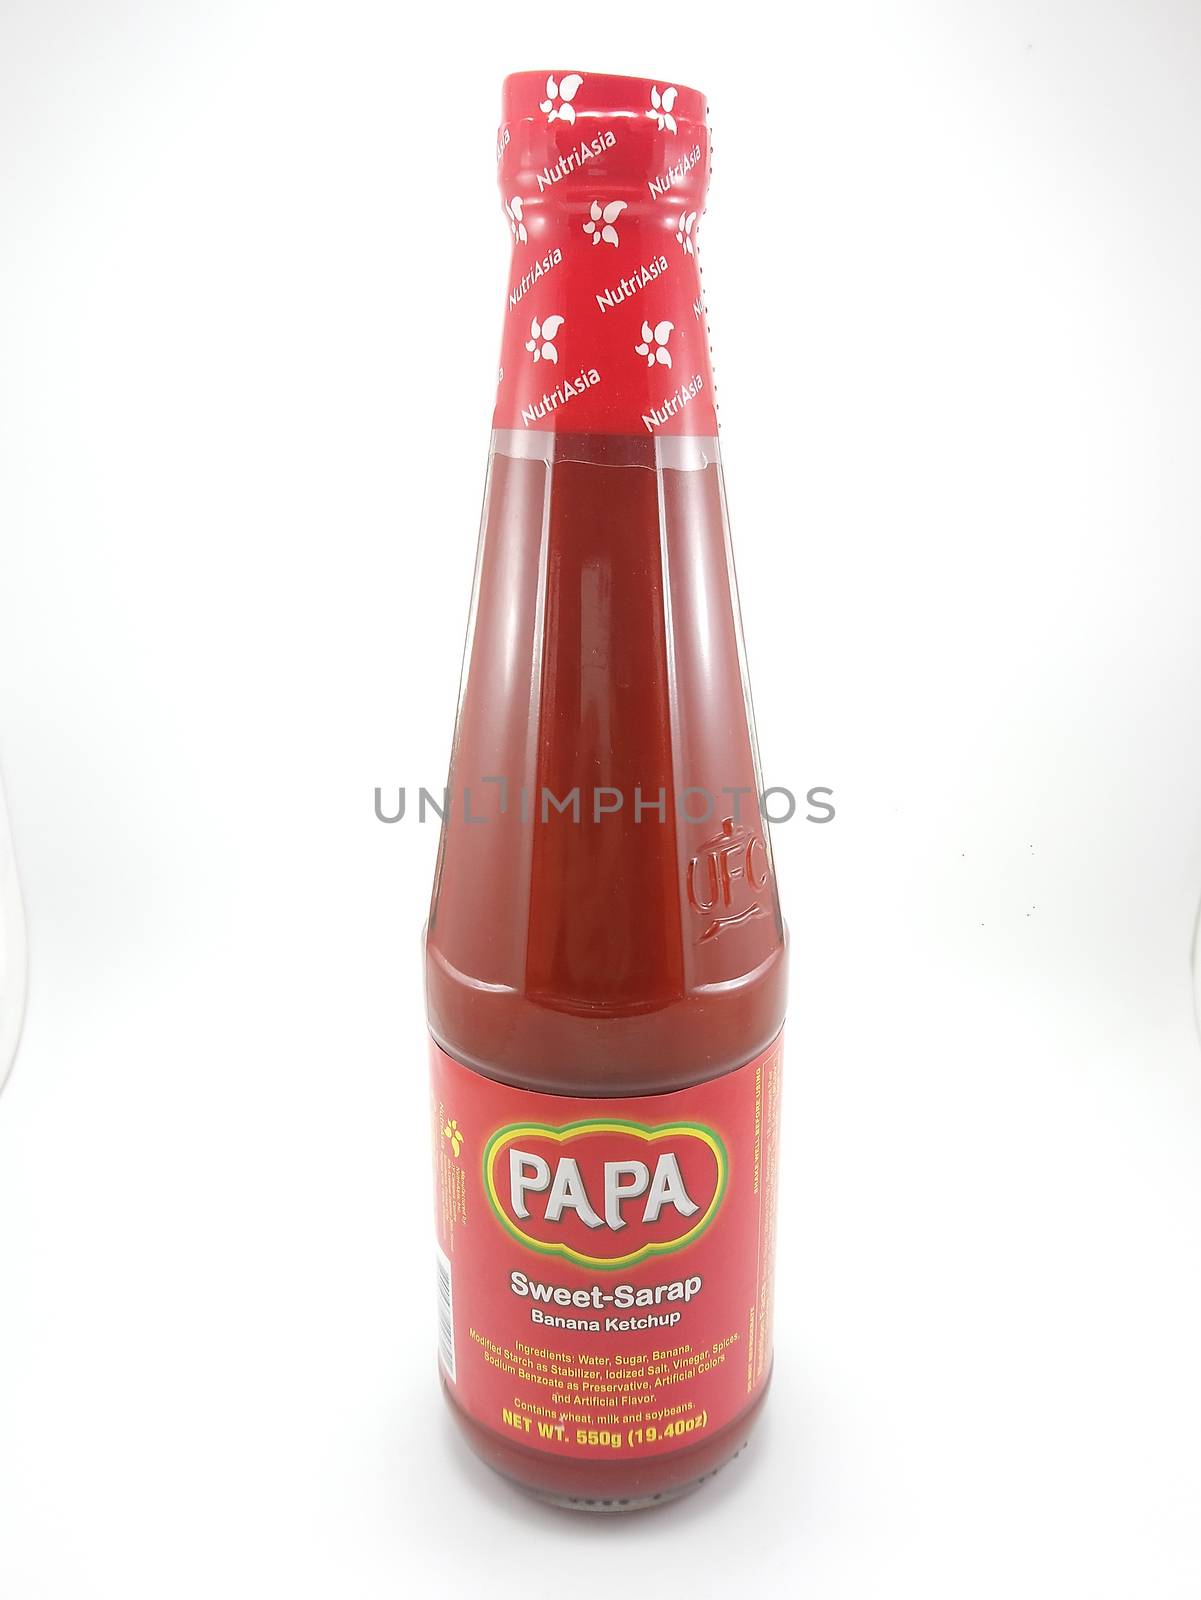 Papa banana ketchup bottle in Manila, Philippines by imwaltersy